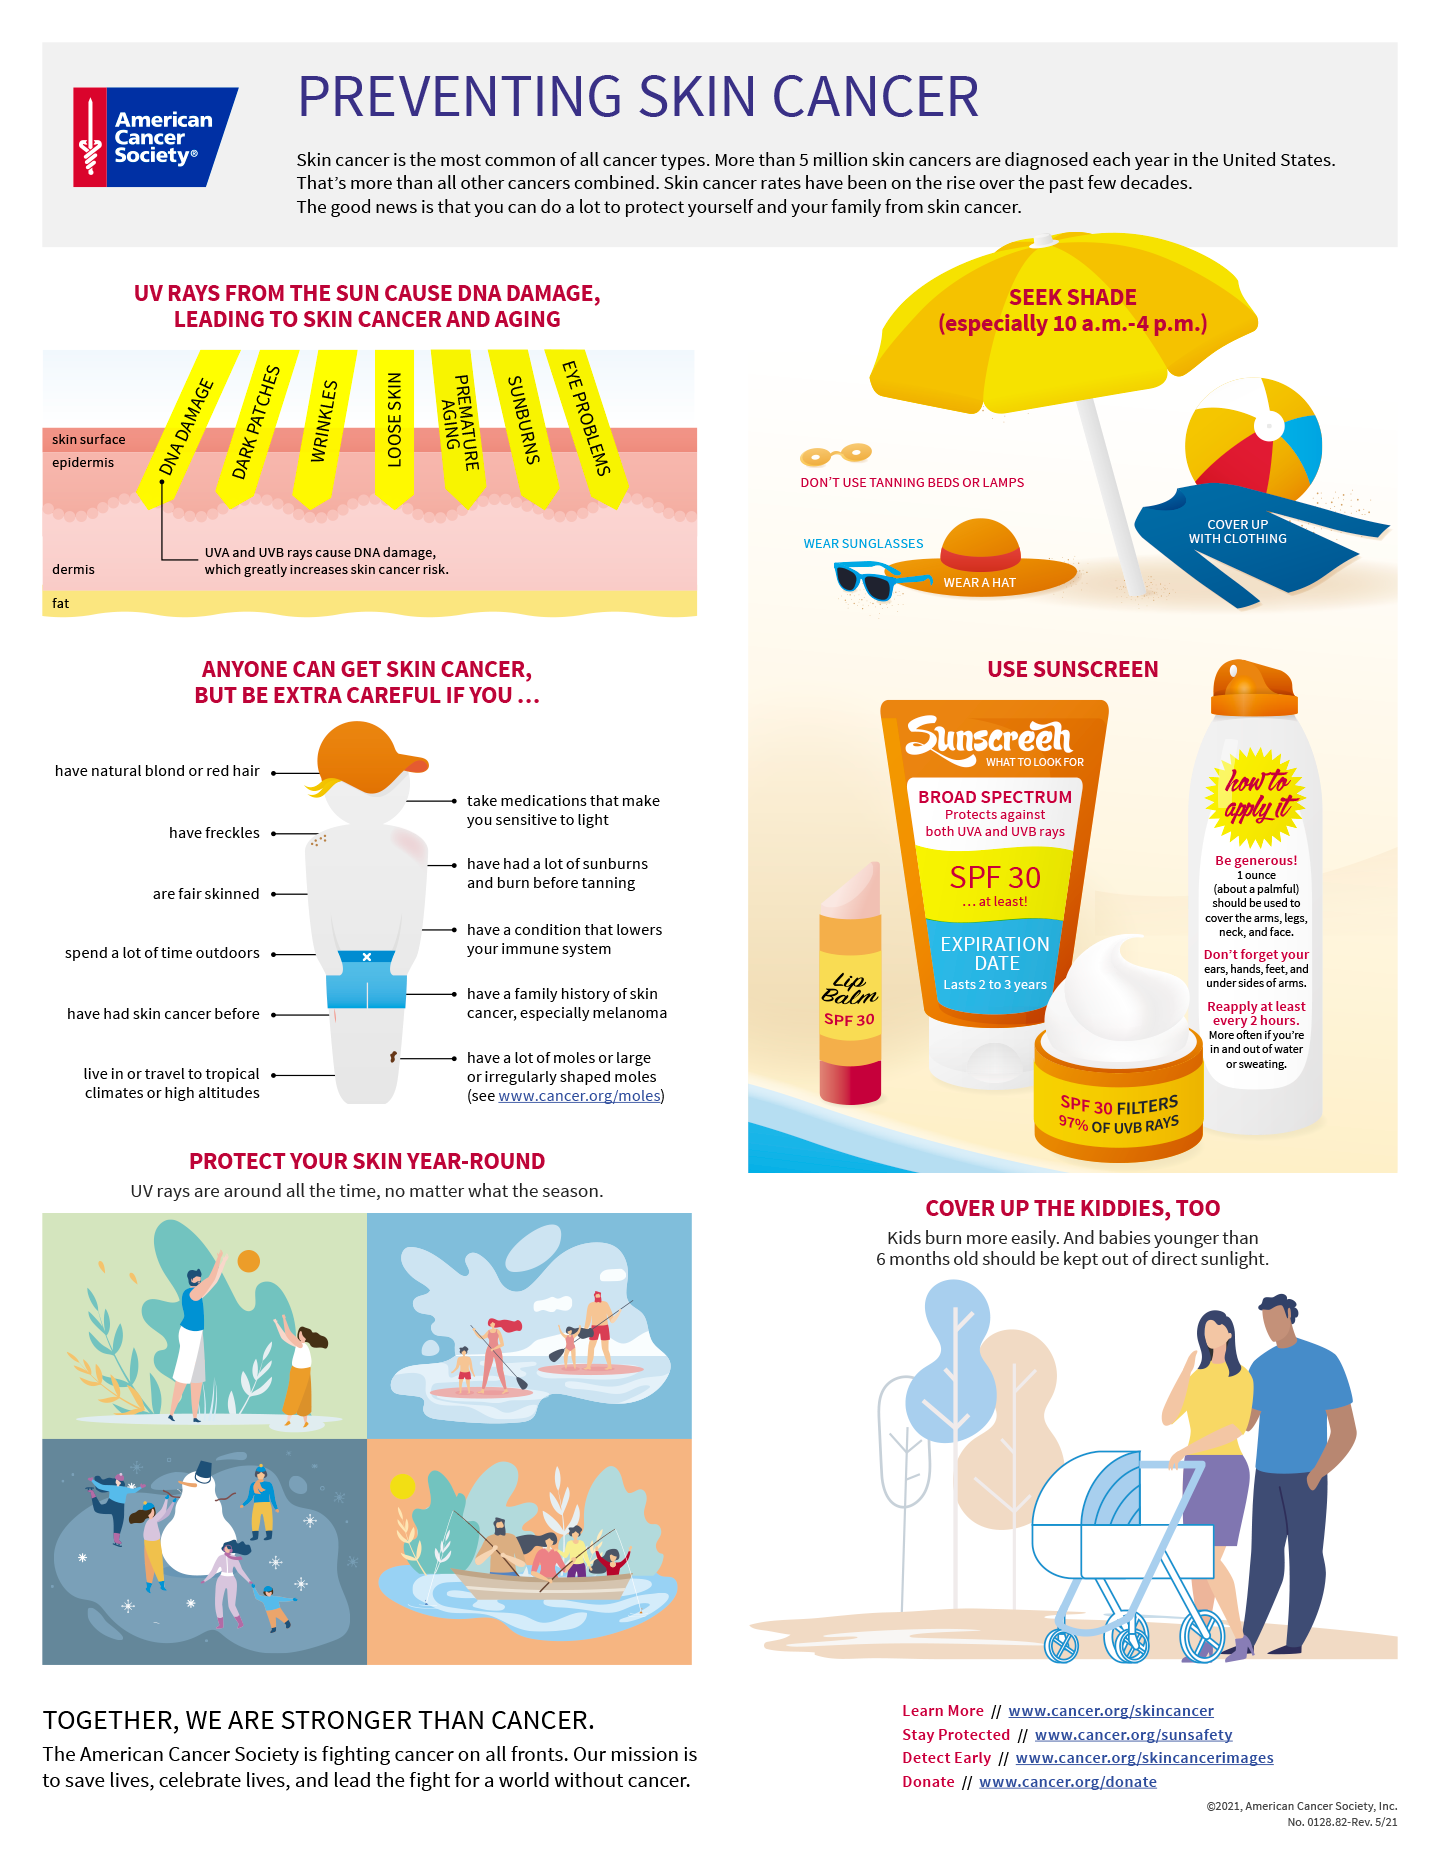 Skin Cancer Prevention infographic; see text alternative for full description